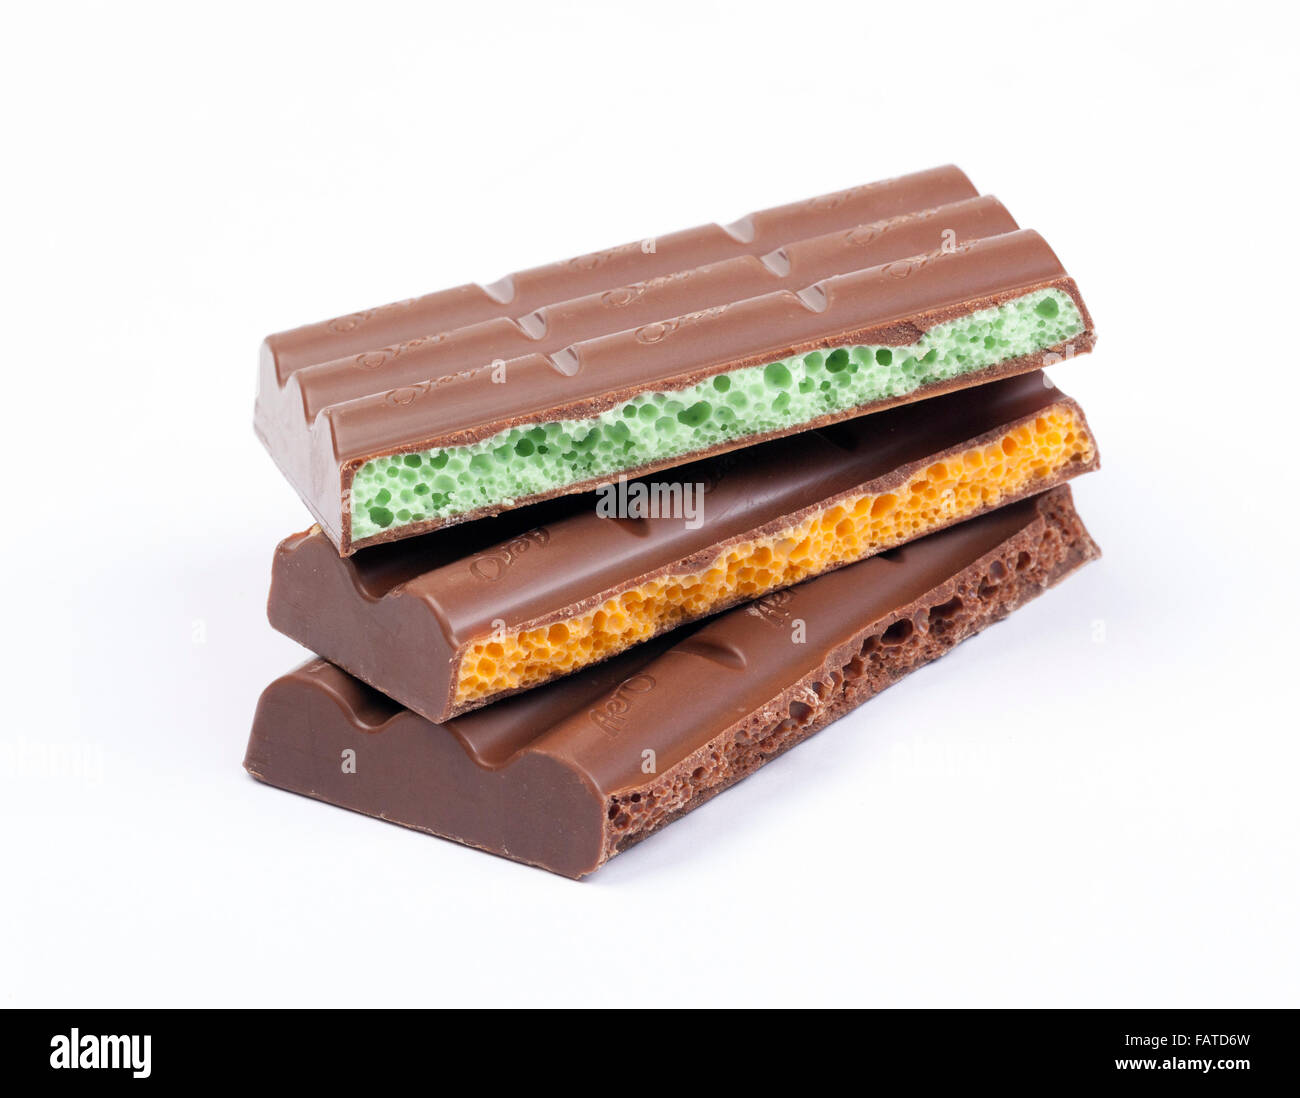 Nestlé Aero chocolate bars Stock Photo